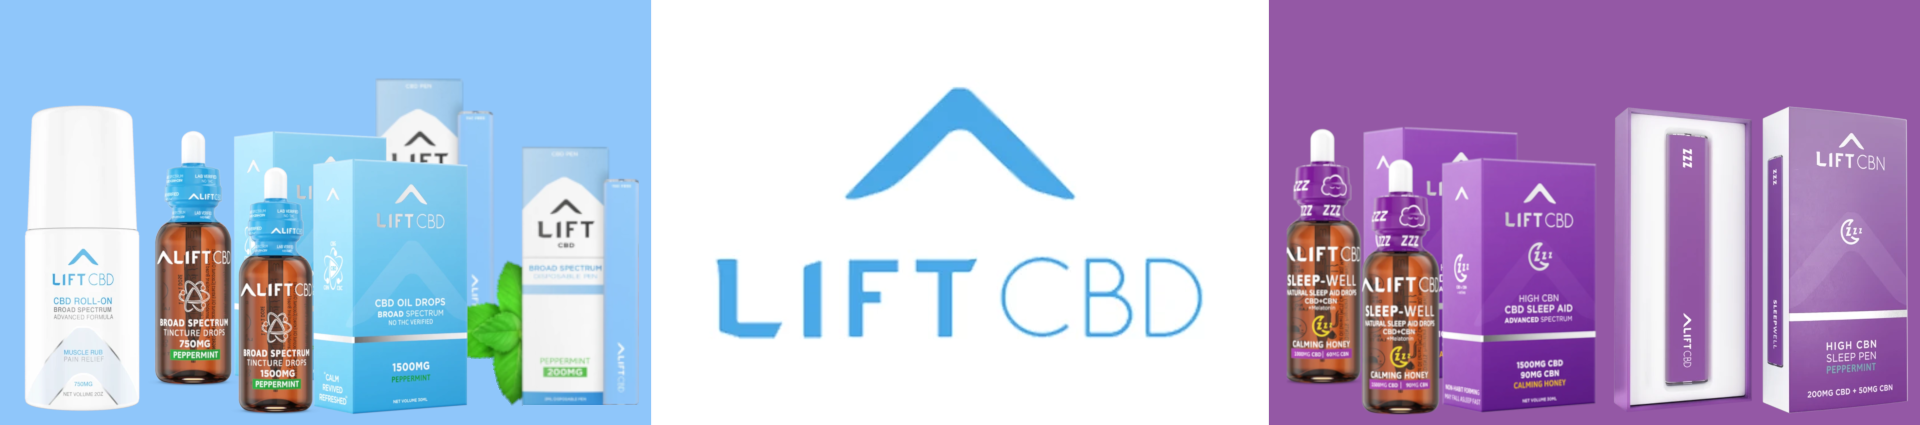 Lift CBD